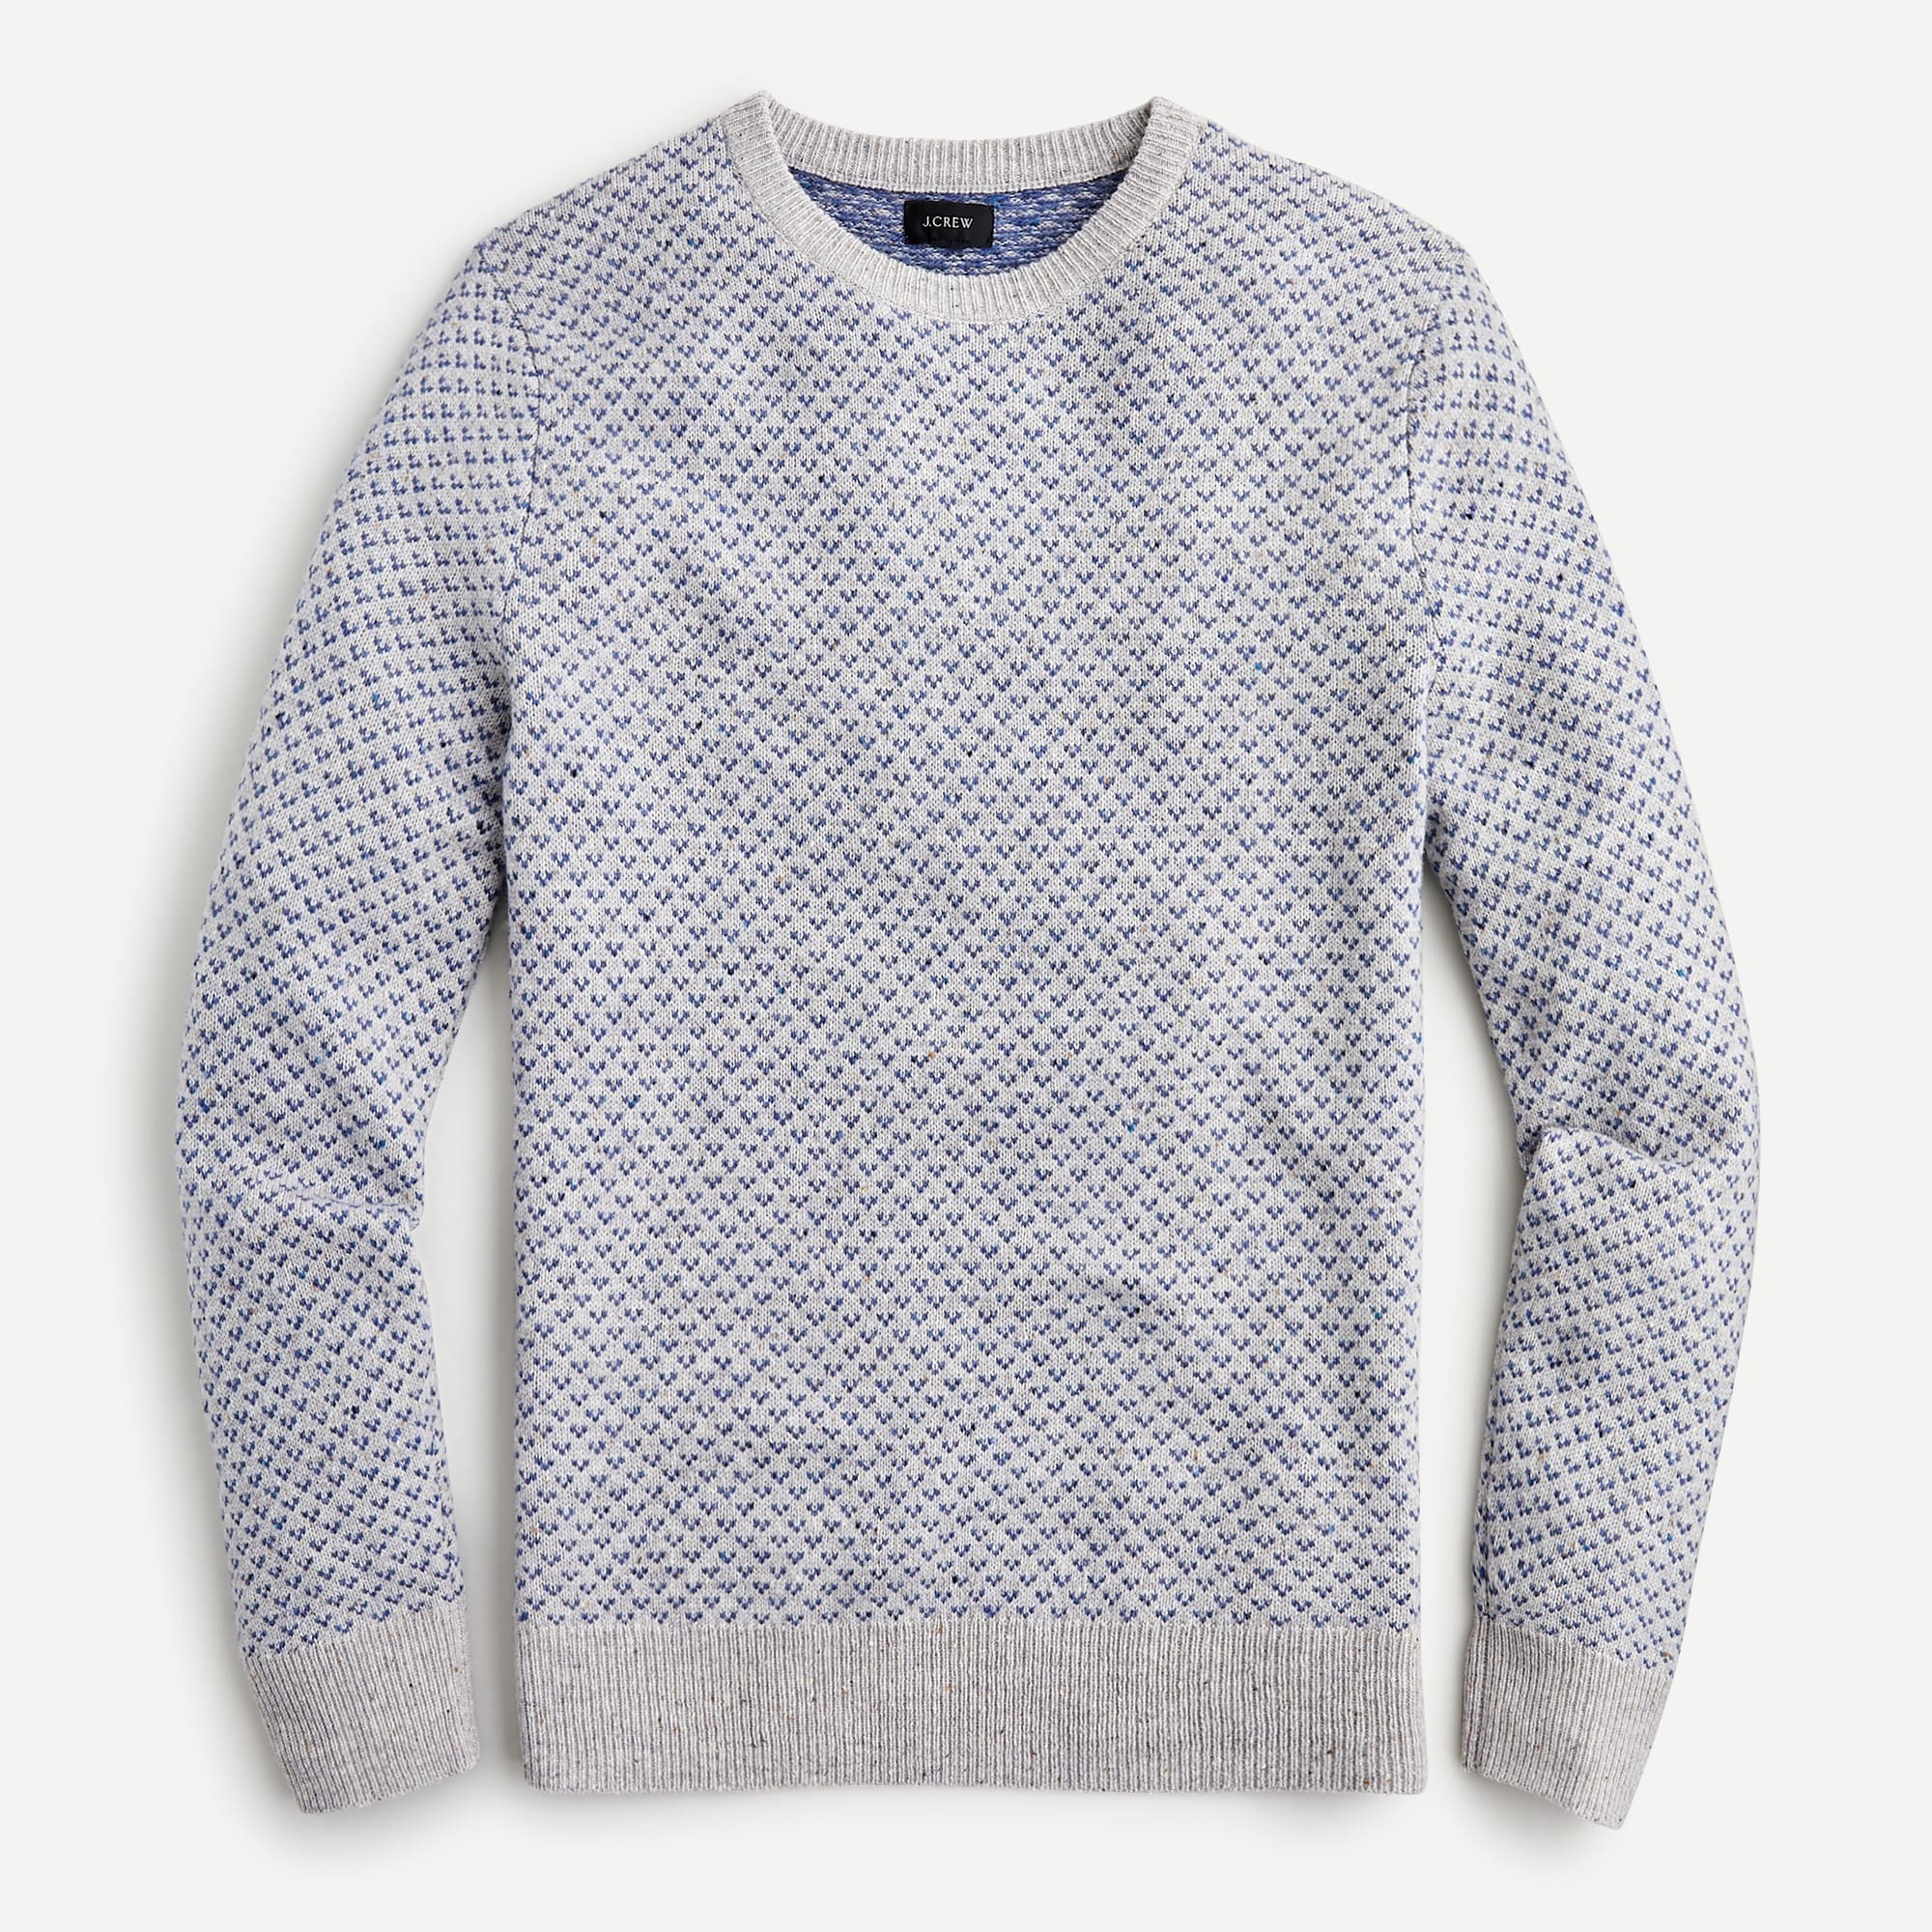 J.Crew: Rugged Merino Wool Donegal Bird's-eye Sweater For Men